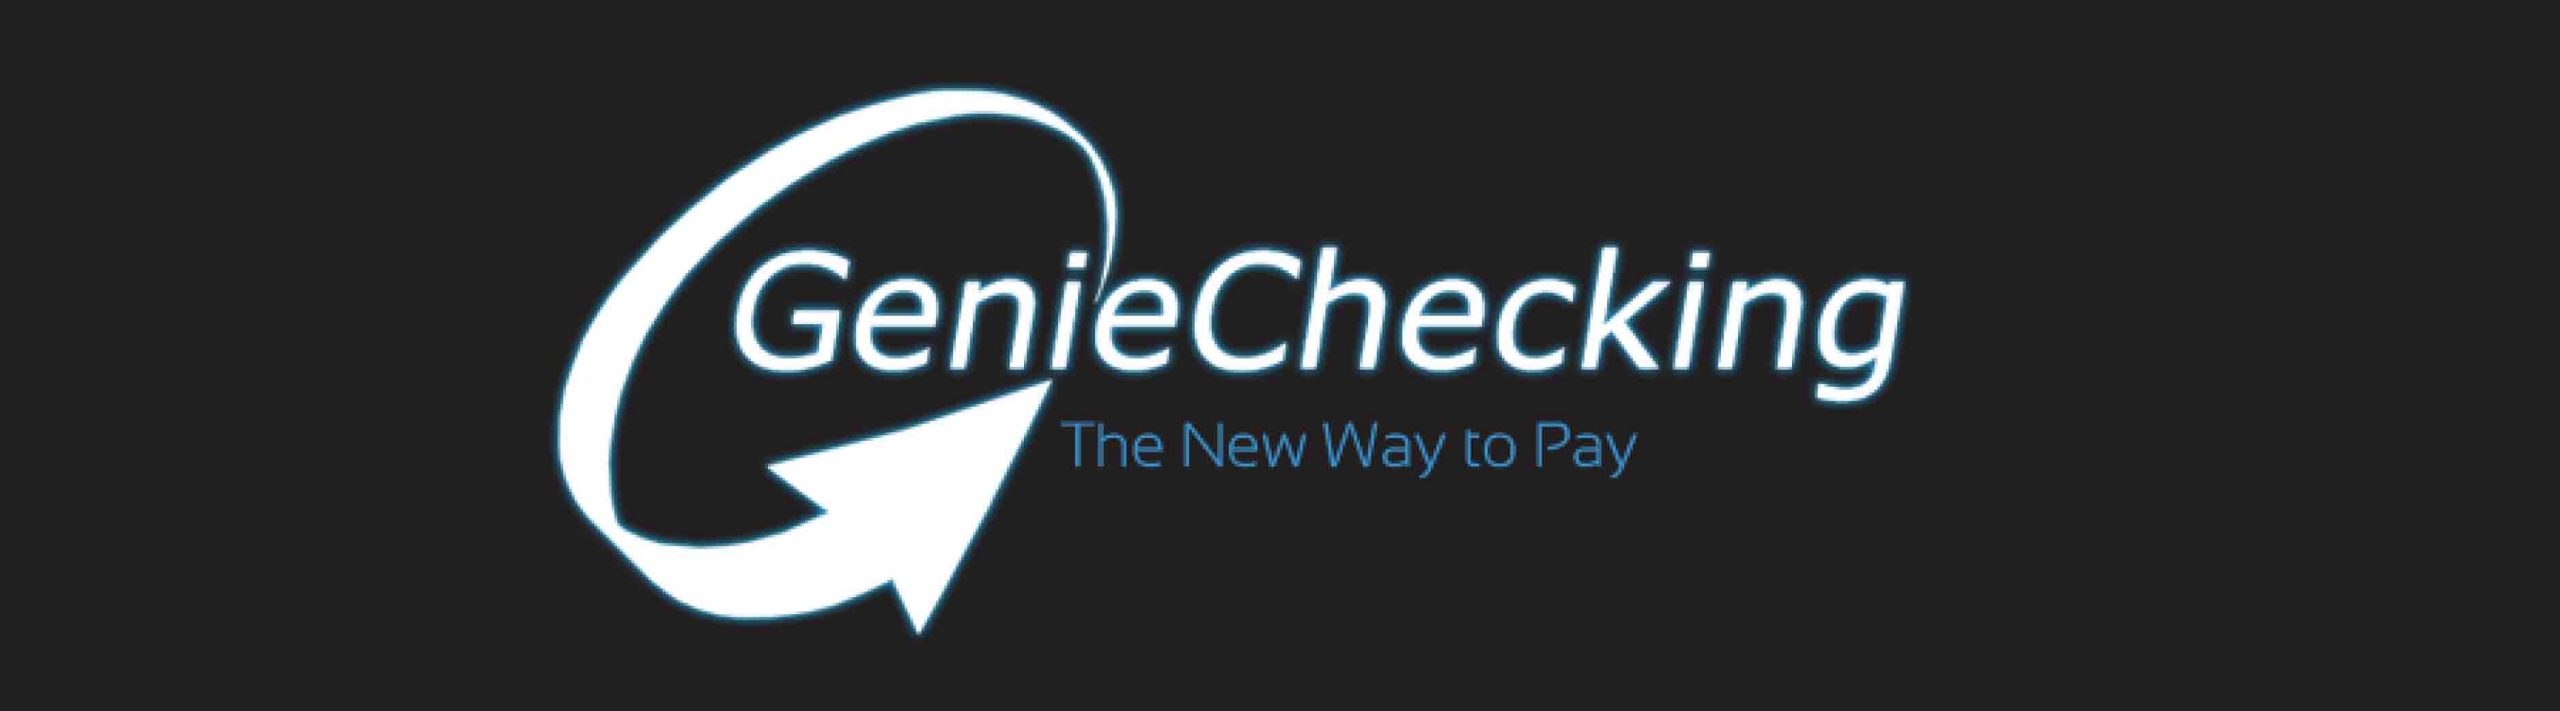 Genie-Checking-logo